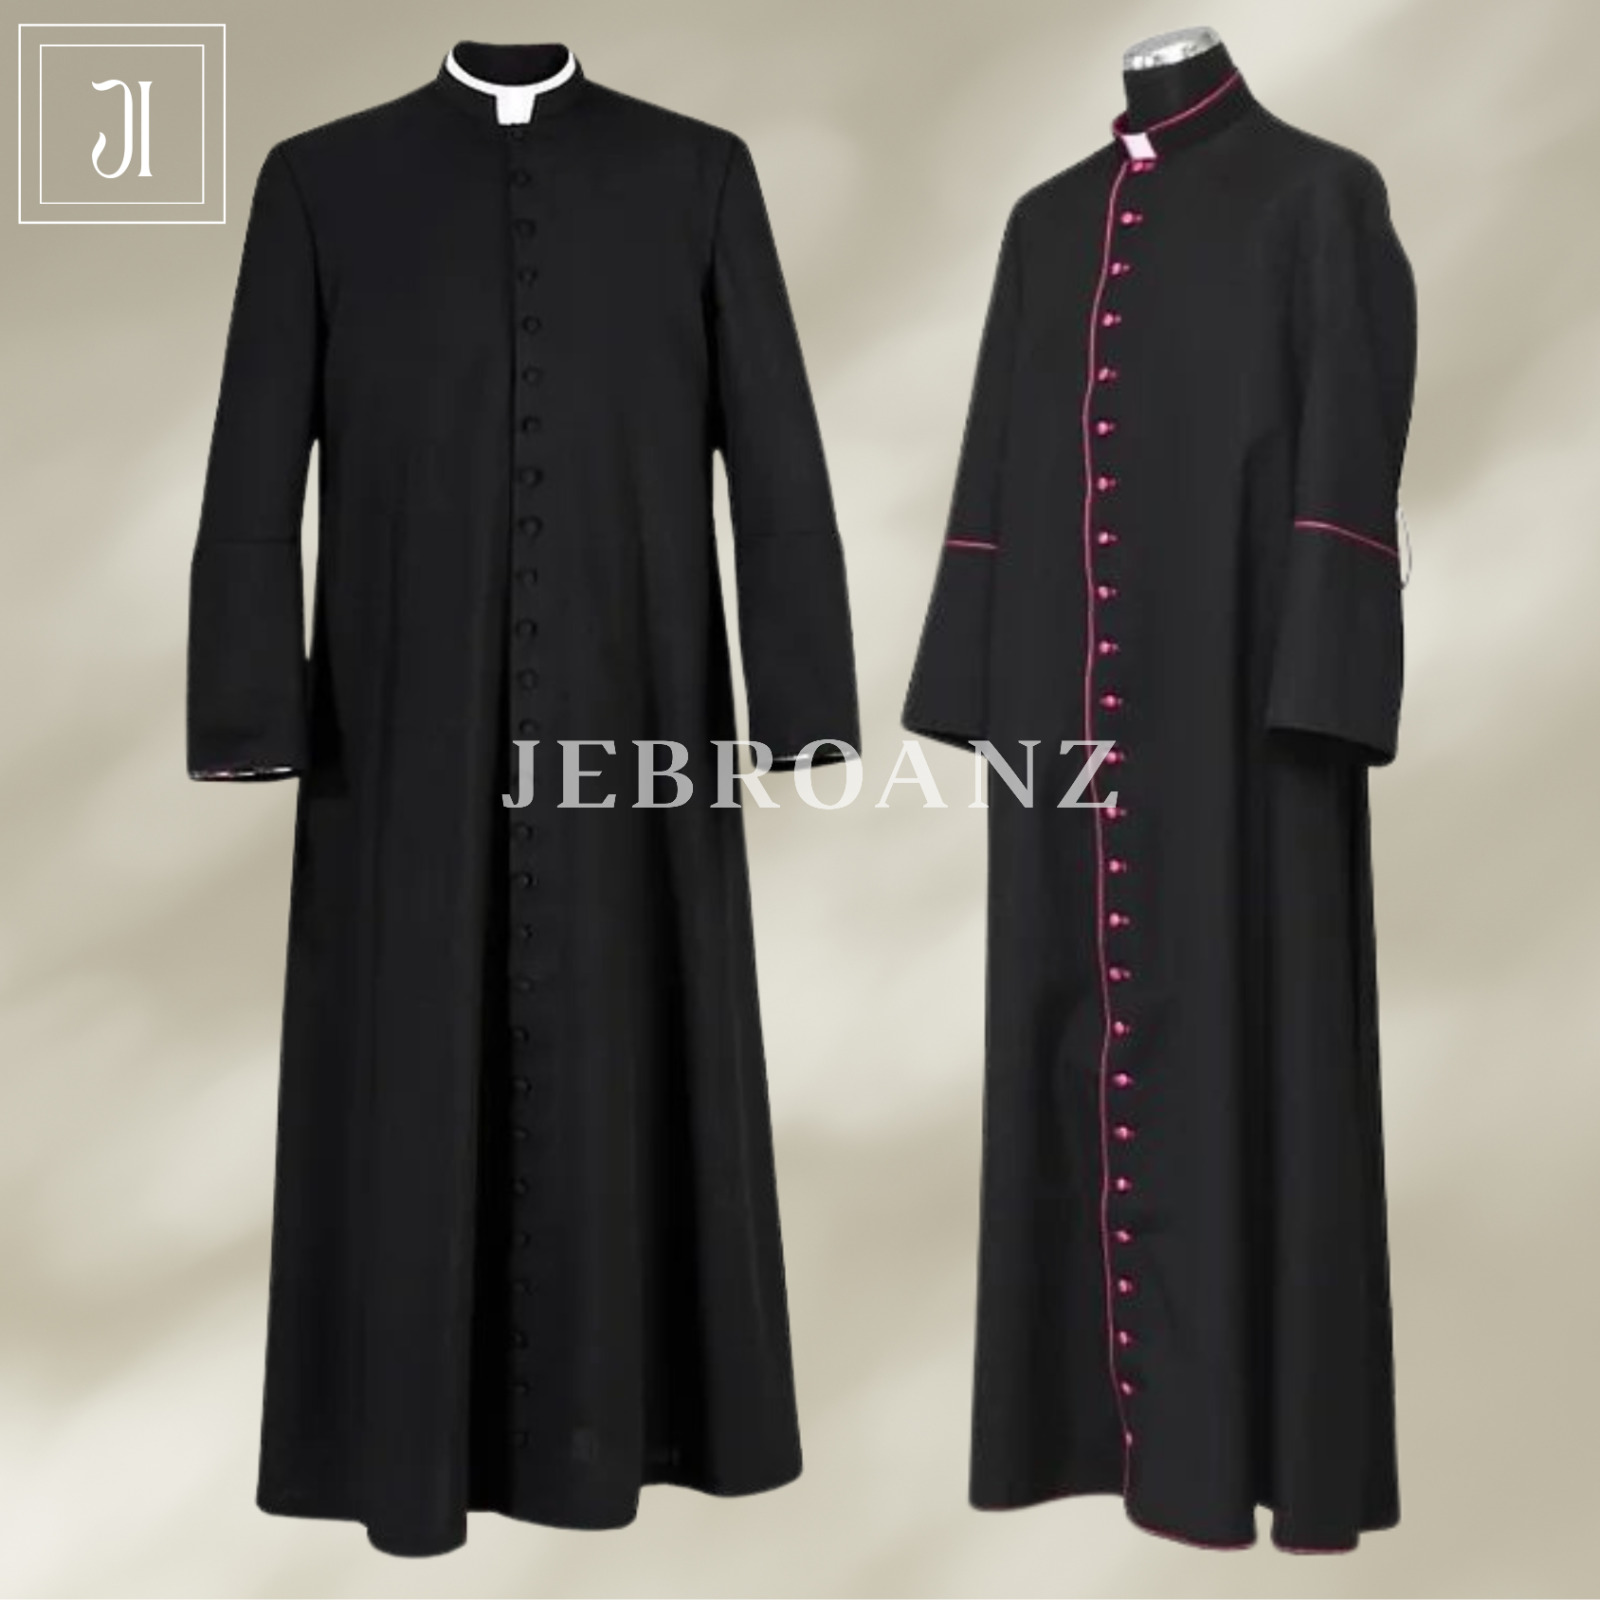 United Kingdom Roman Vestment Cassock Tropic Wool Coat - Catholic Bishop Clergy